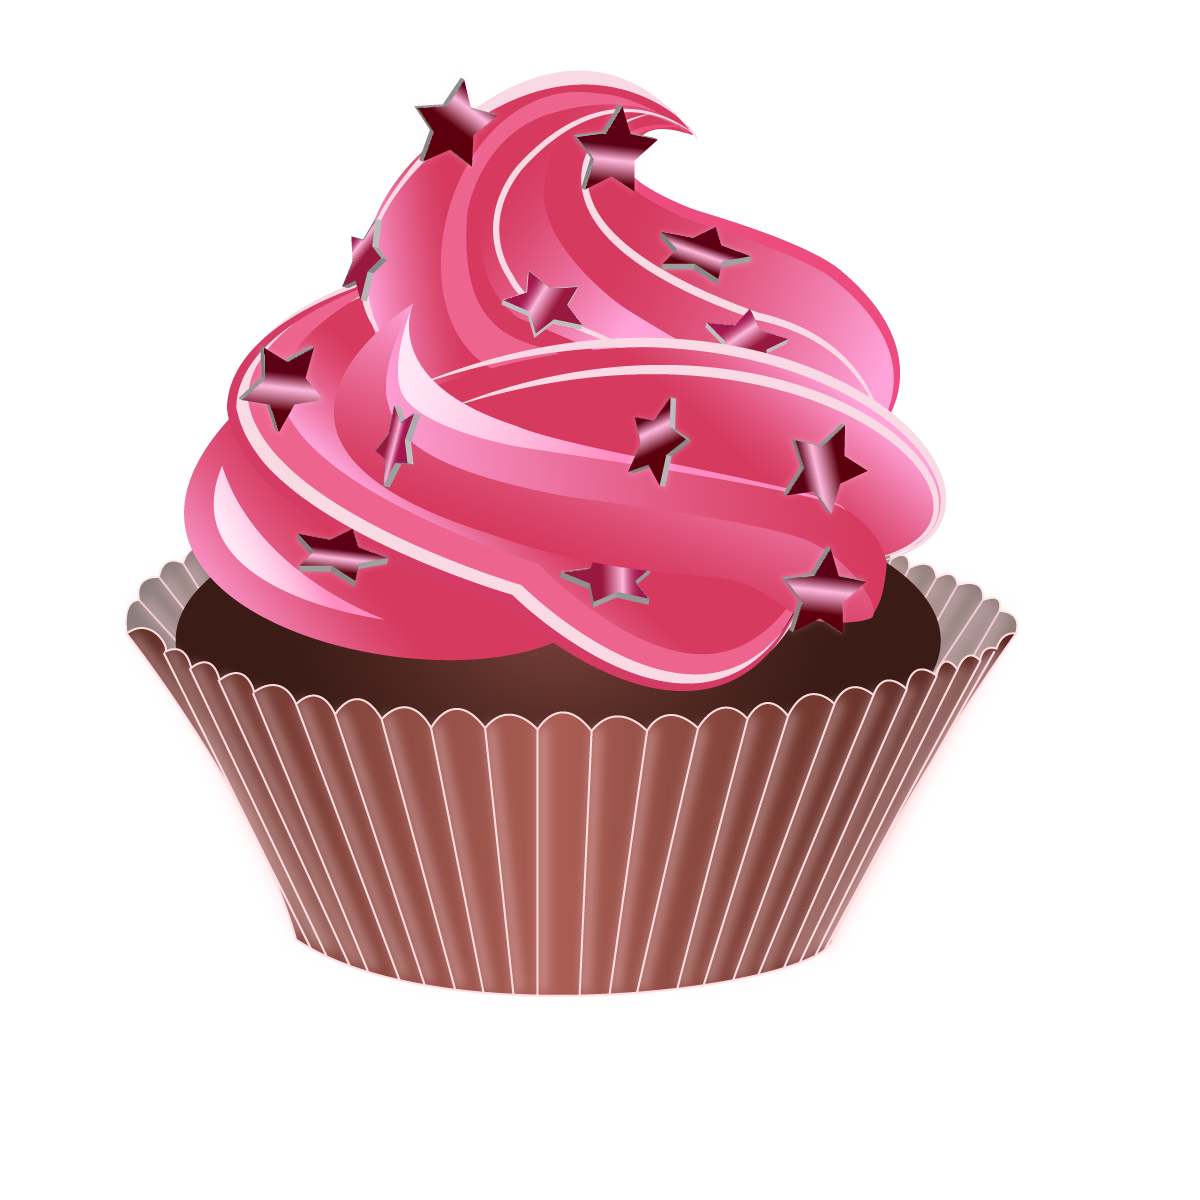 free vector clipart cupcake - photo #9